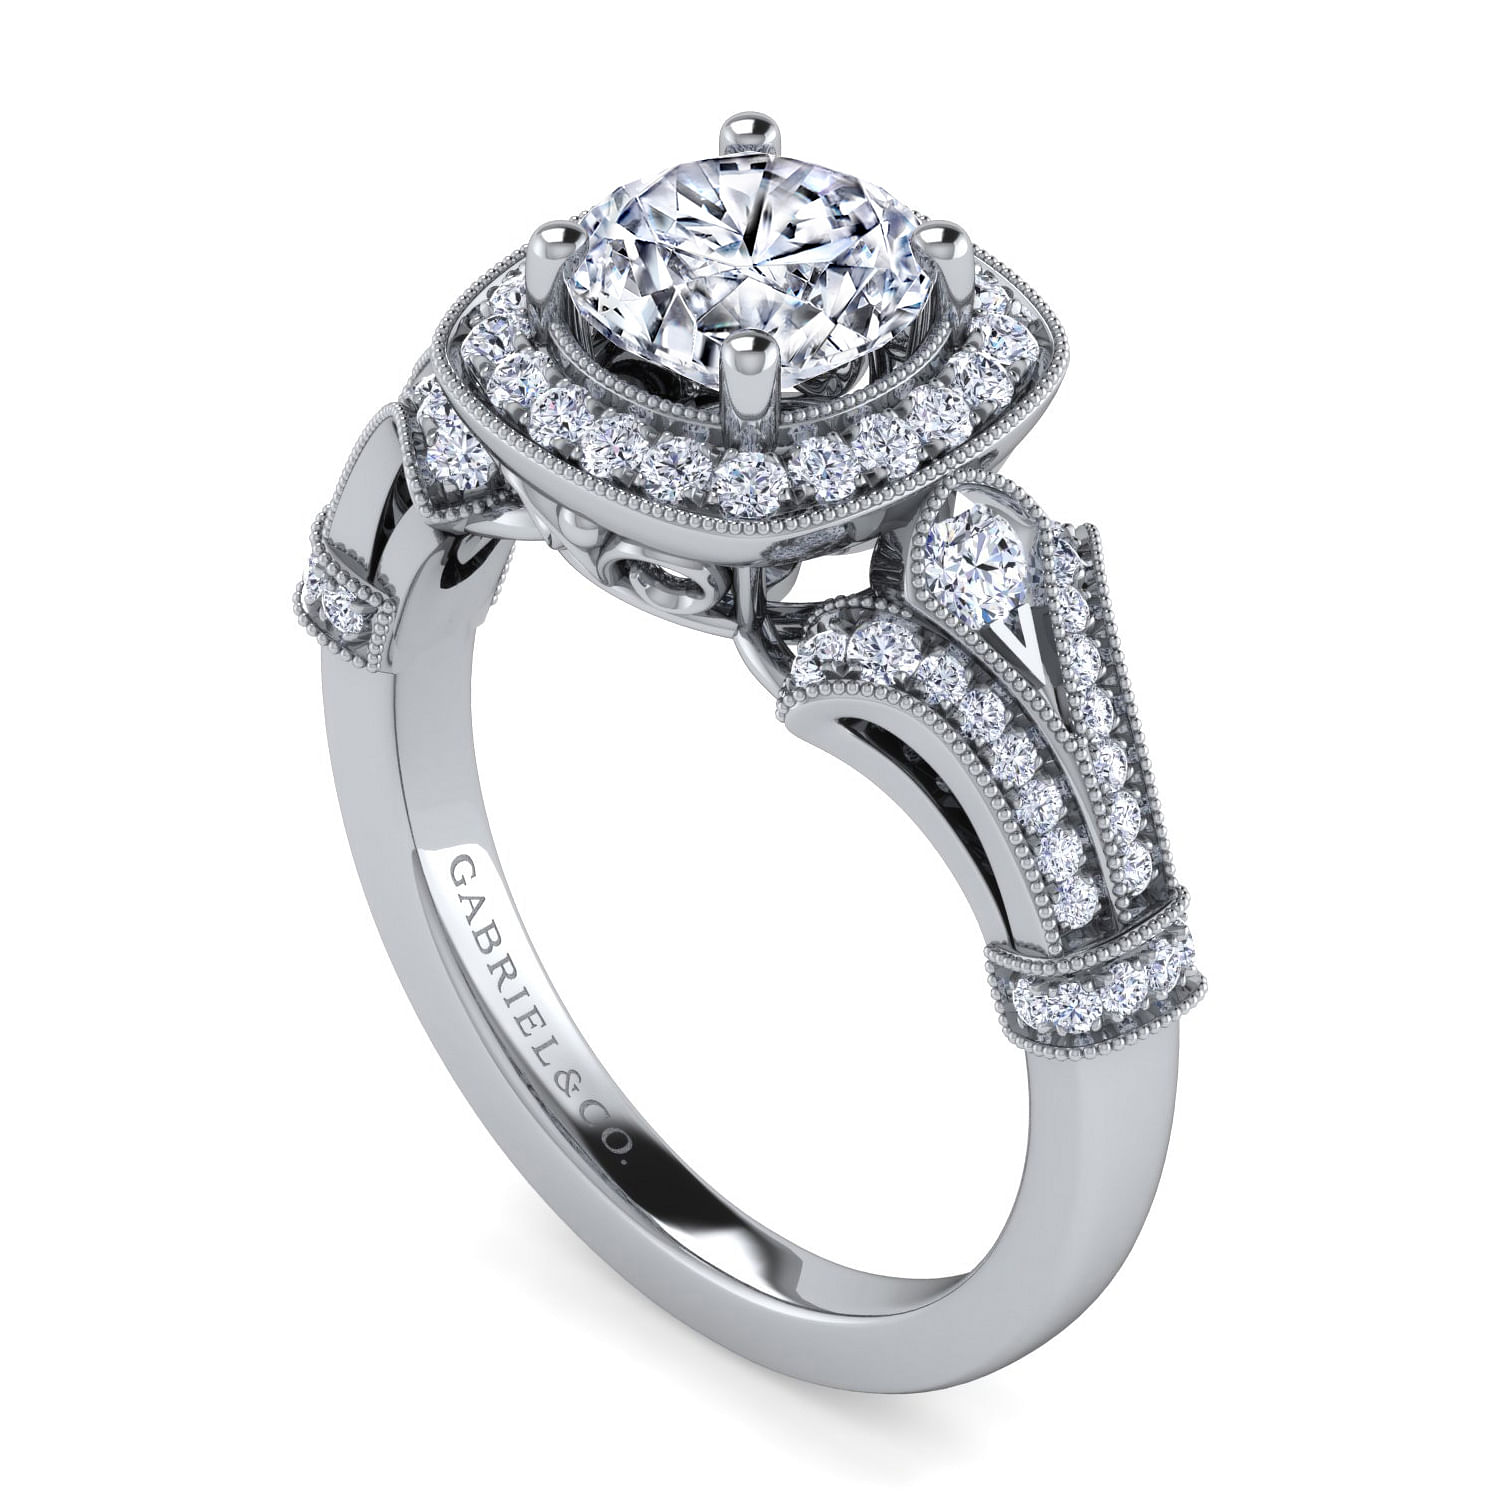 Vintage Inspired 14K White Gold Cushion Halo Round Diamond Engagement Ring